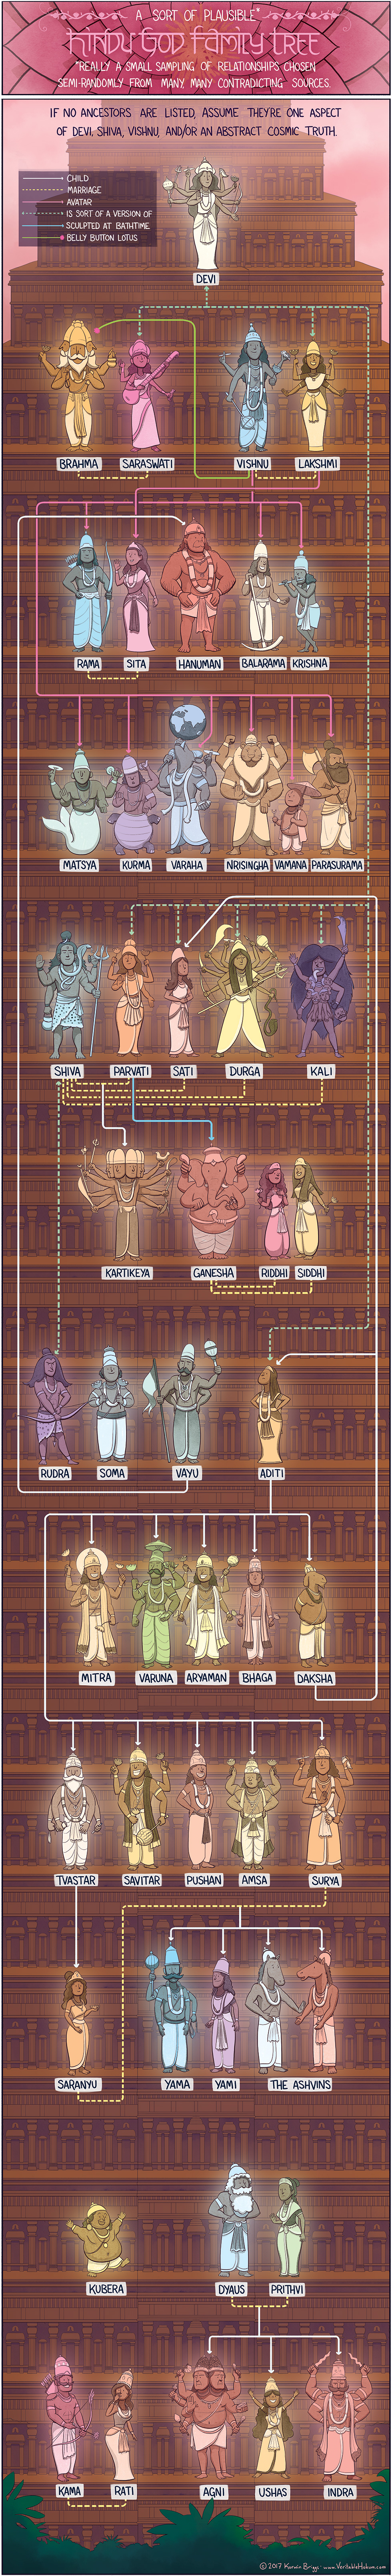 hindu gods and goddesses family tree